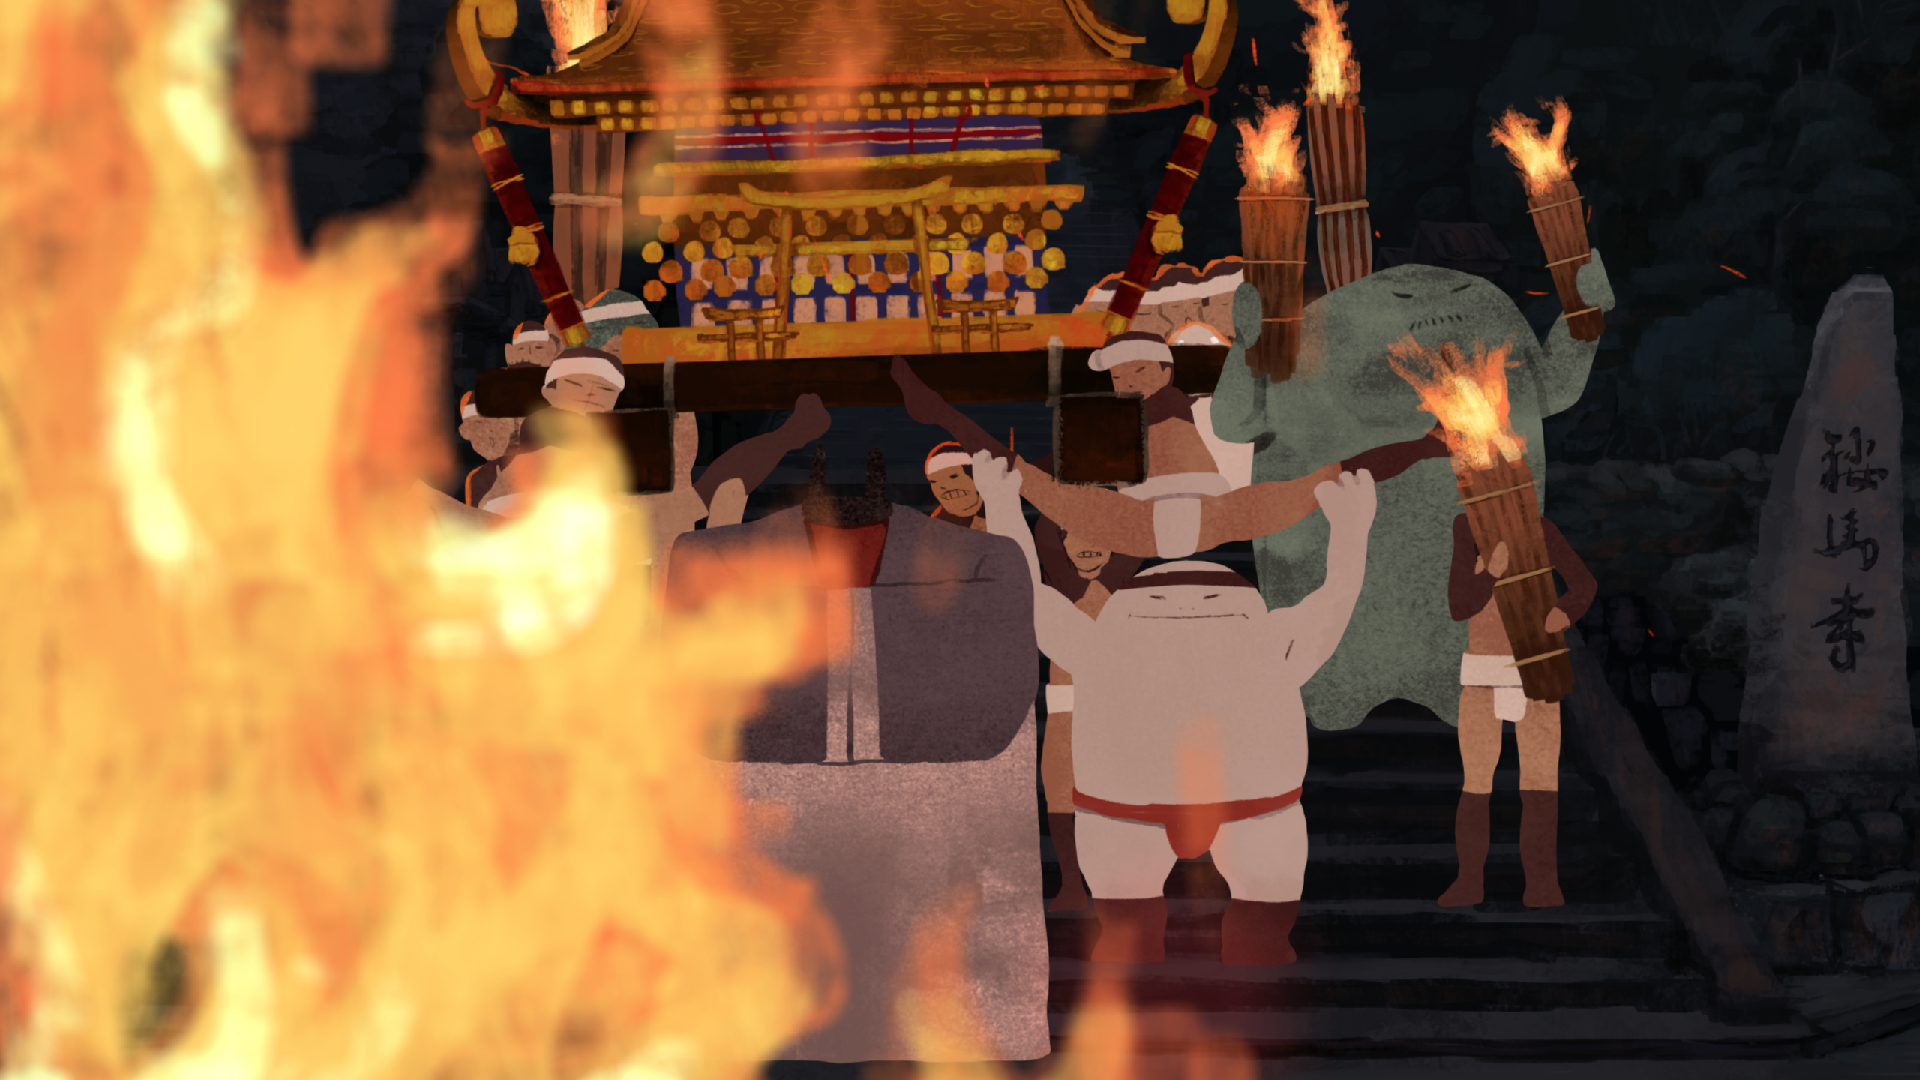 THE FIRE CELEBRATION AT KURAMA